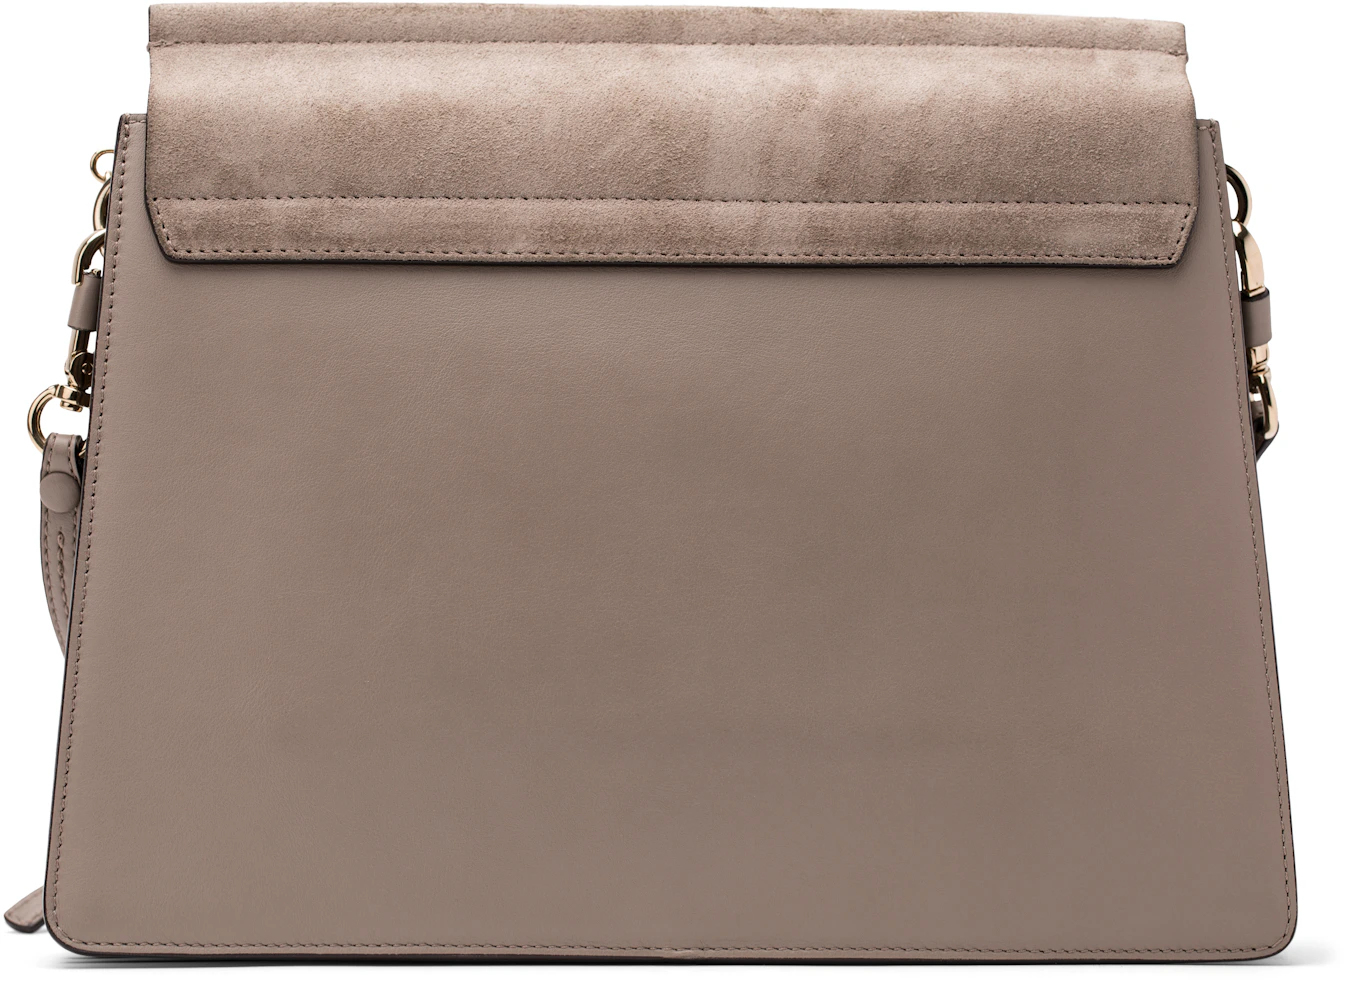 Chloe Faye Shoulder Bag Medium Motty Grey in Calfskin Leather/Suede with  Gold-tone/Silver-tone - US